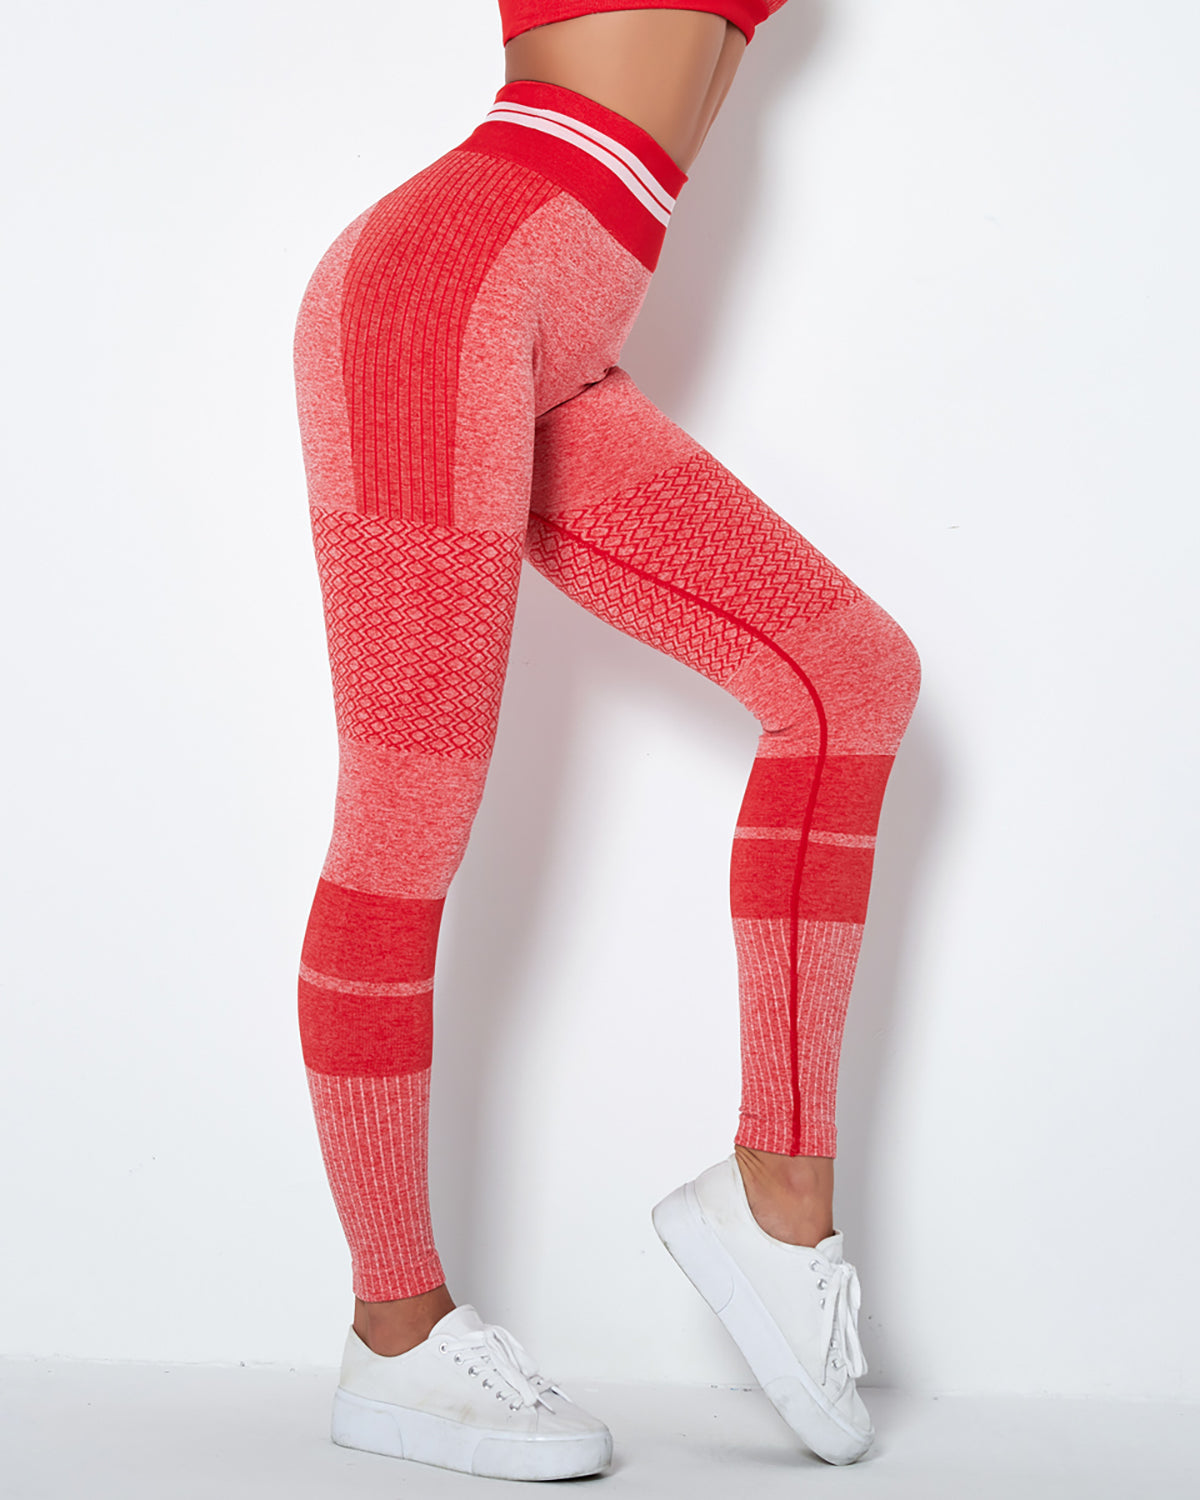 NWT - Avia Activewear Women's Fairisle Seamless Leggings Red Yoga - Size XL